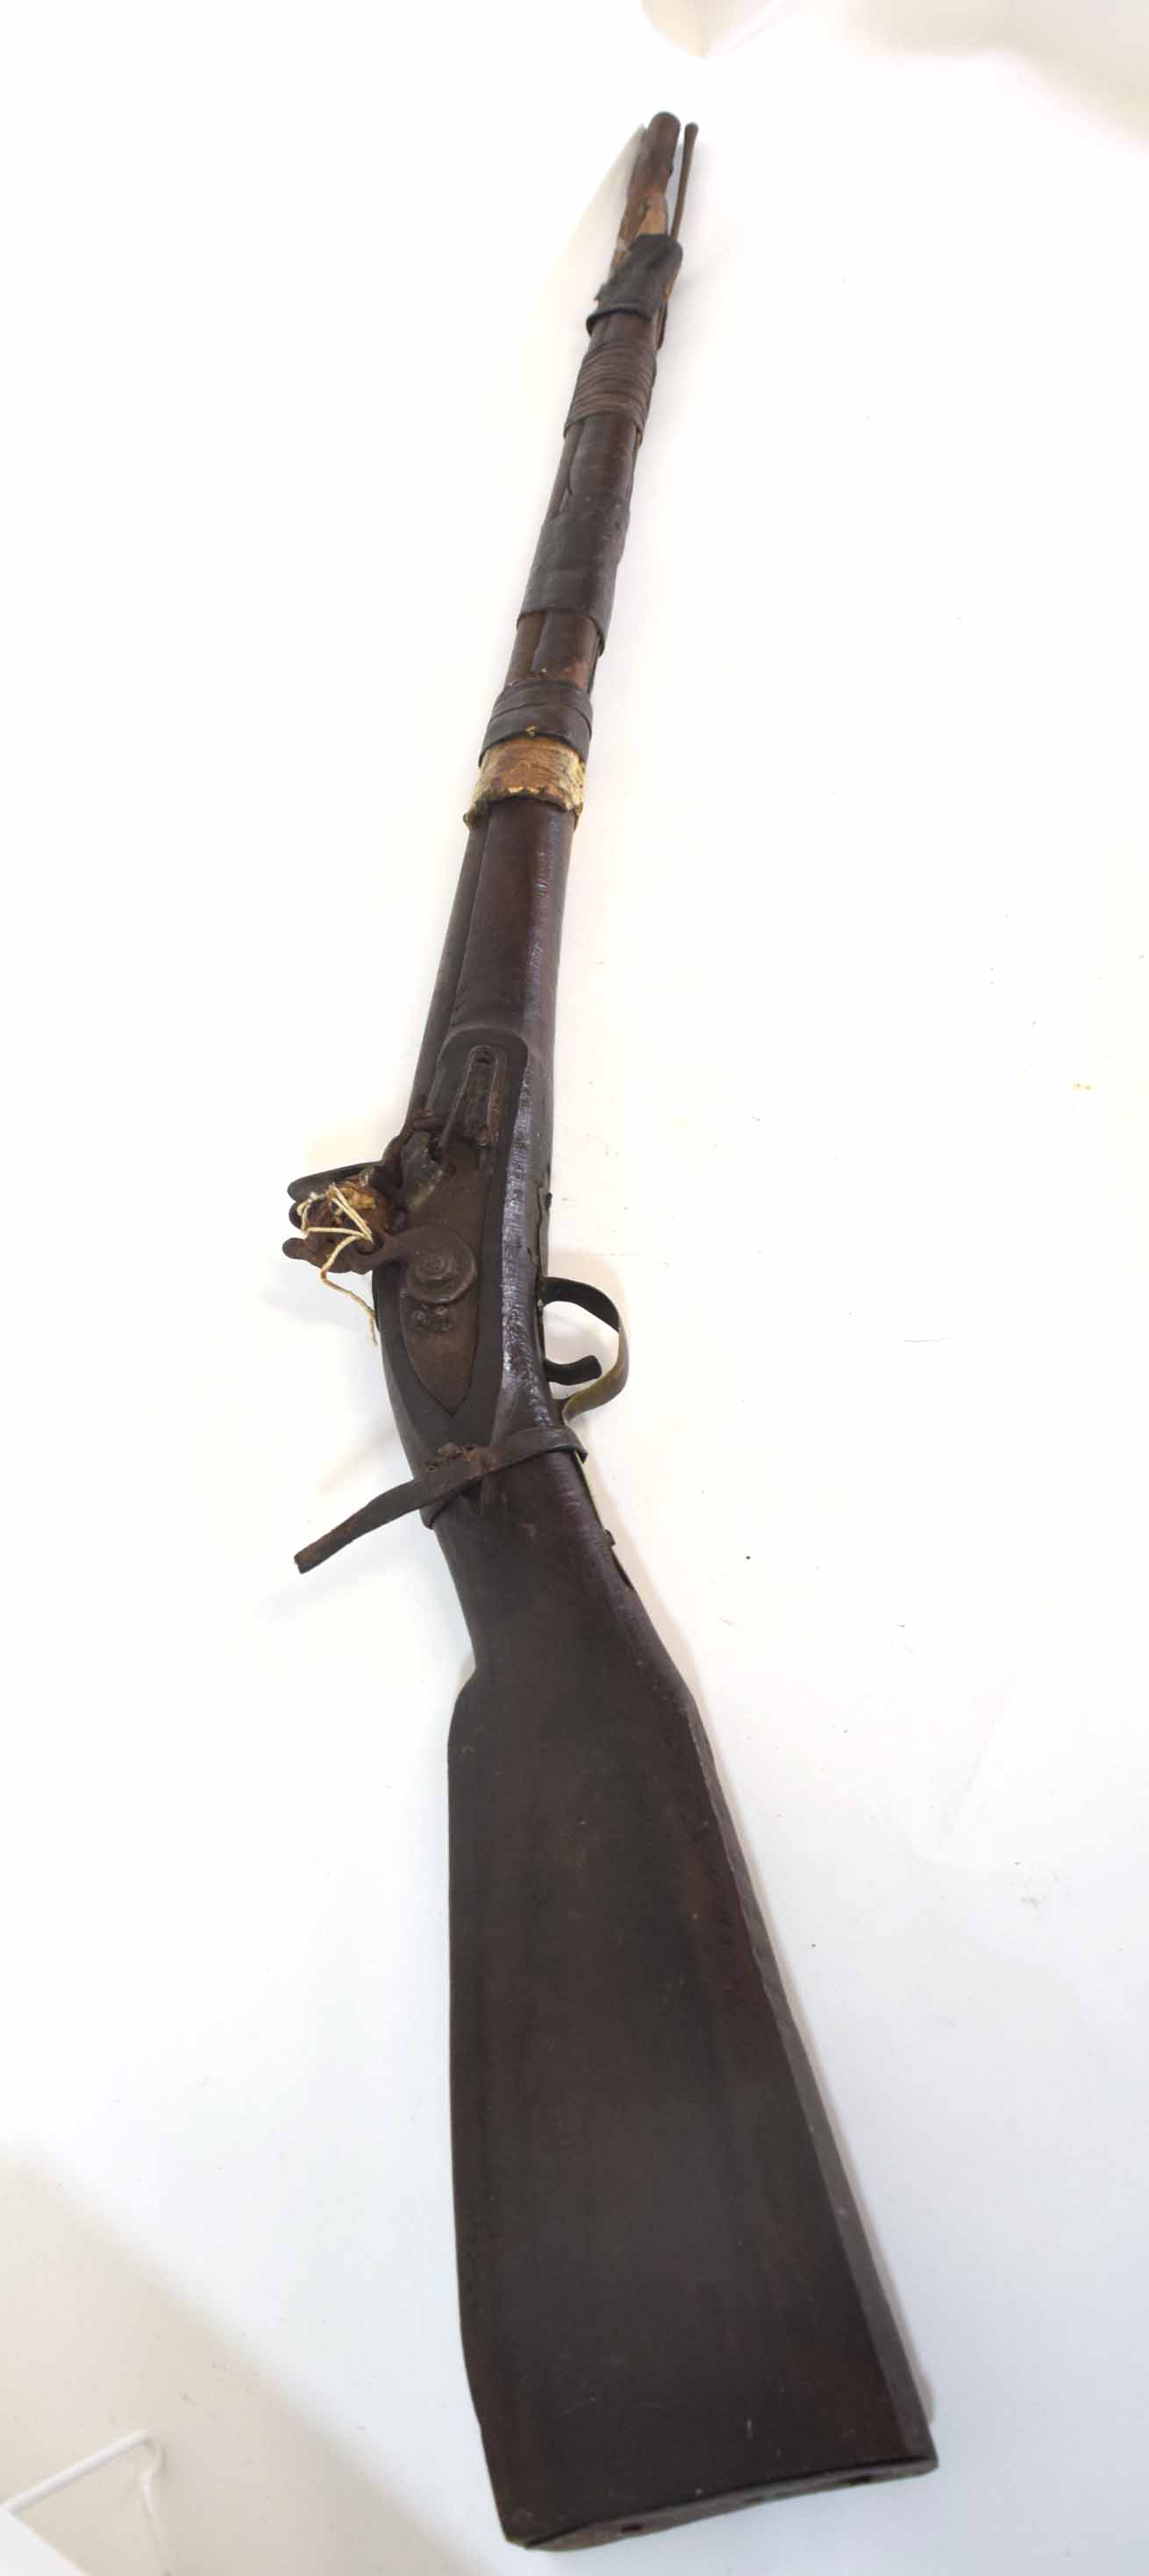 19th century flintlock musket, markings to lock plate illegible, overall length 132cm